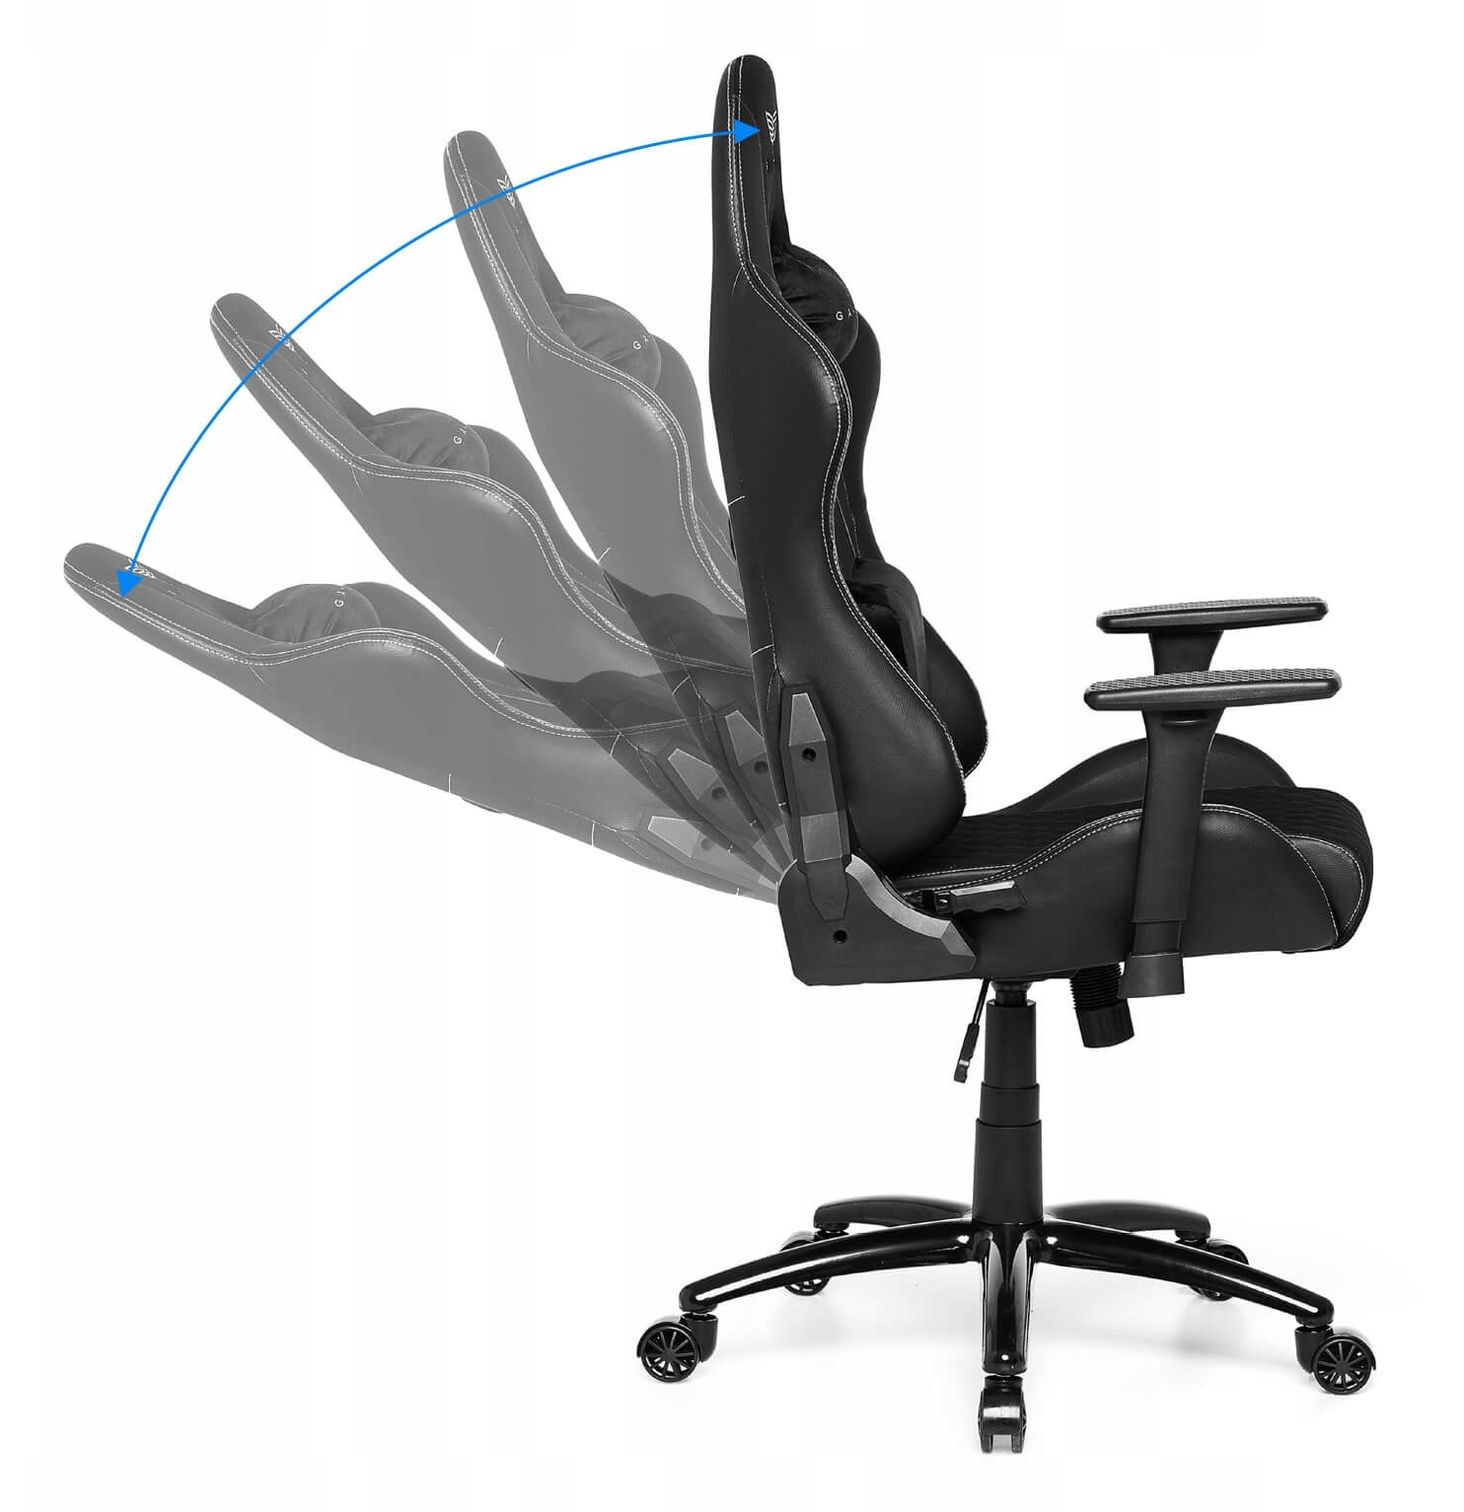 Gamvis PHANTOM Fabric Gaming Chair - Black/Blue - Gamvis Gaming Chairs